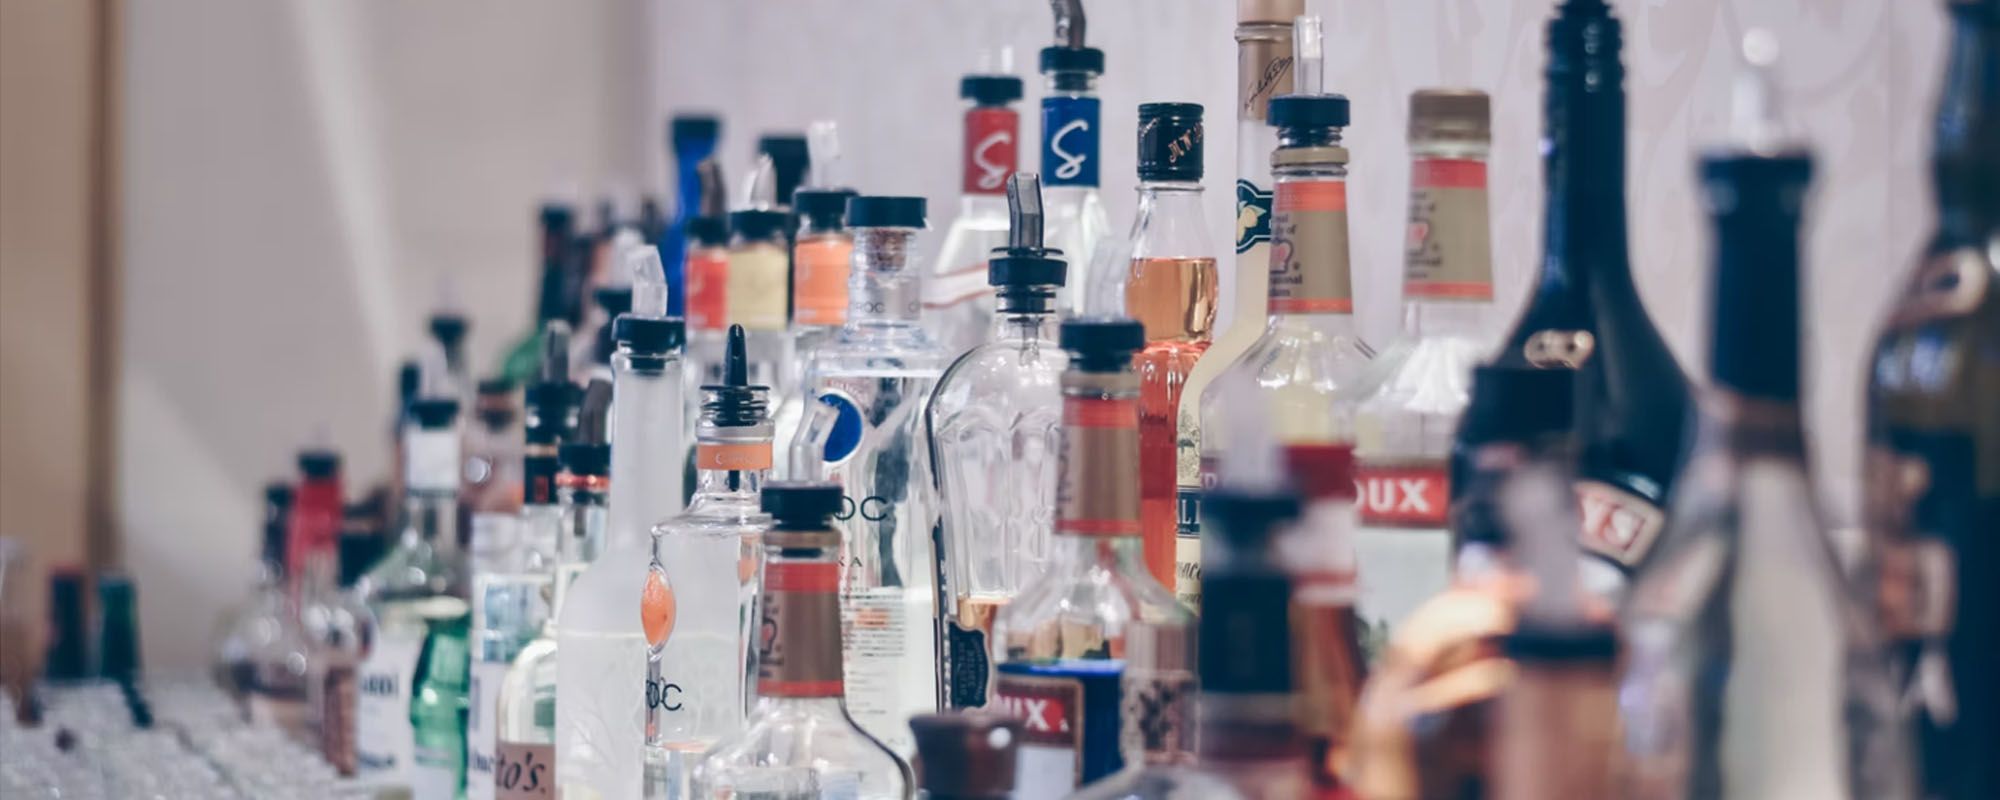 New Study Shows 1 in 6 U.S. Adults Binge Drink